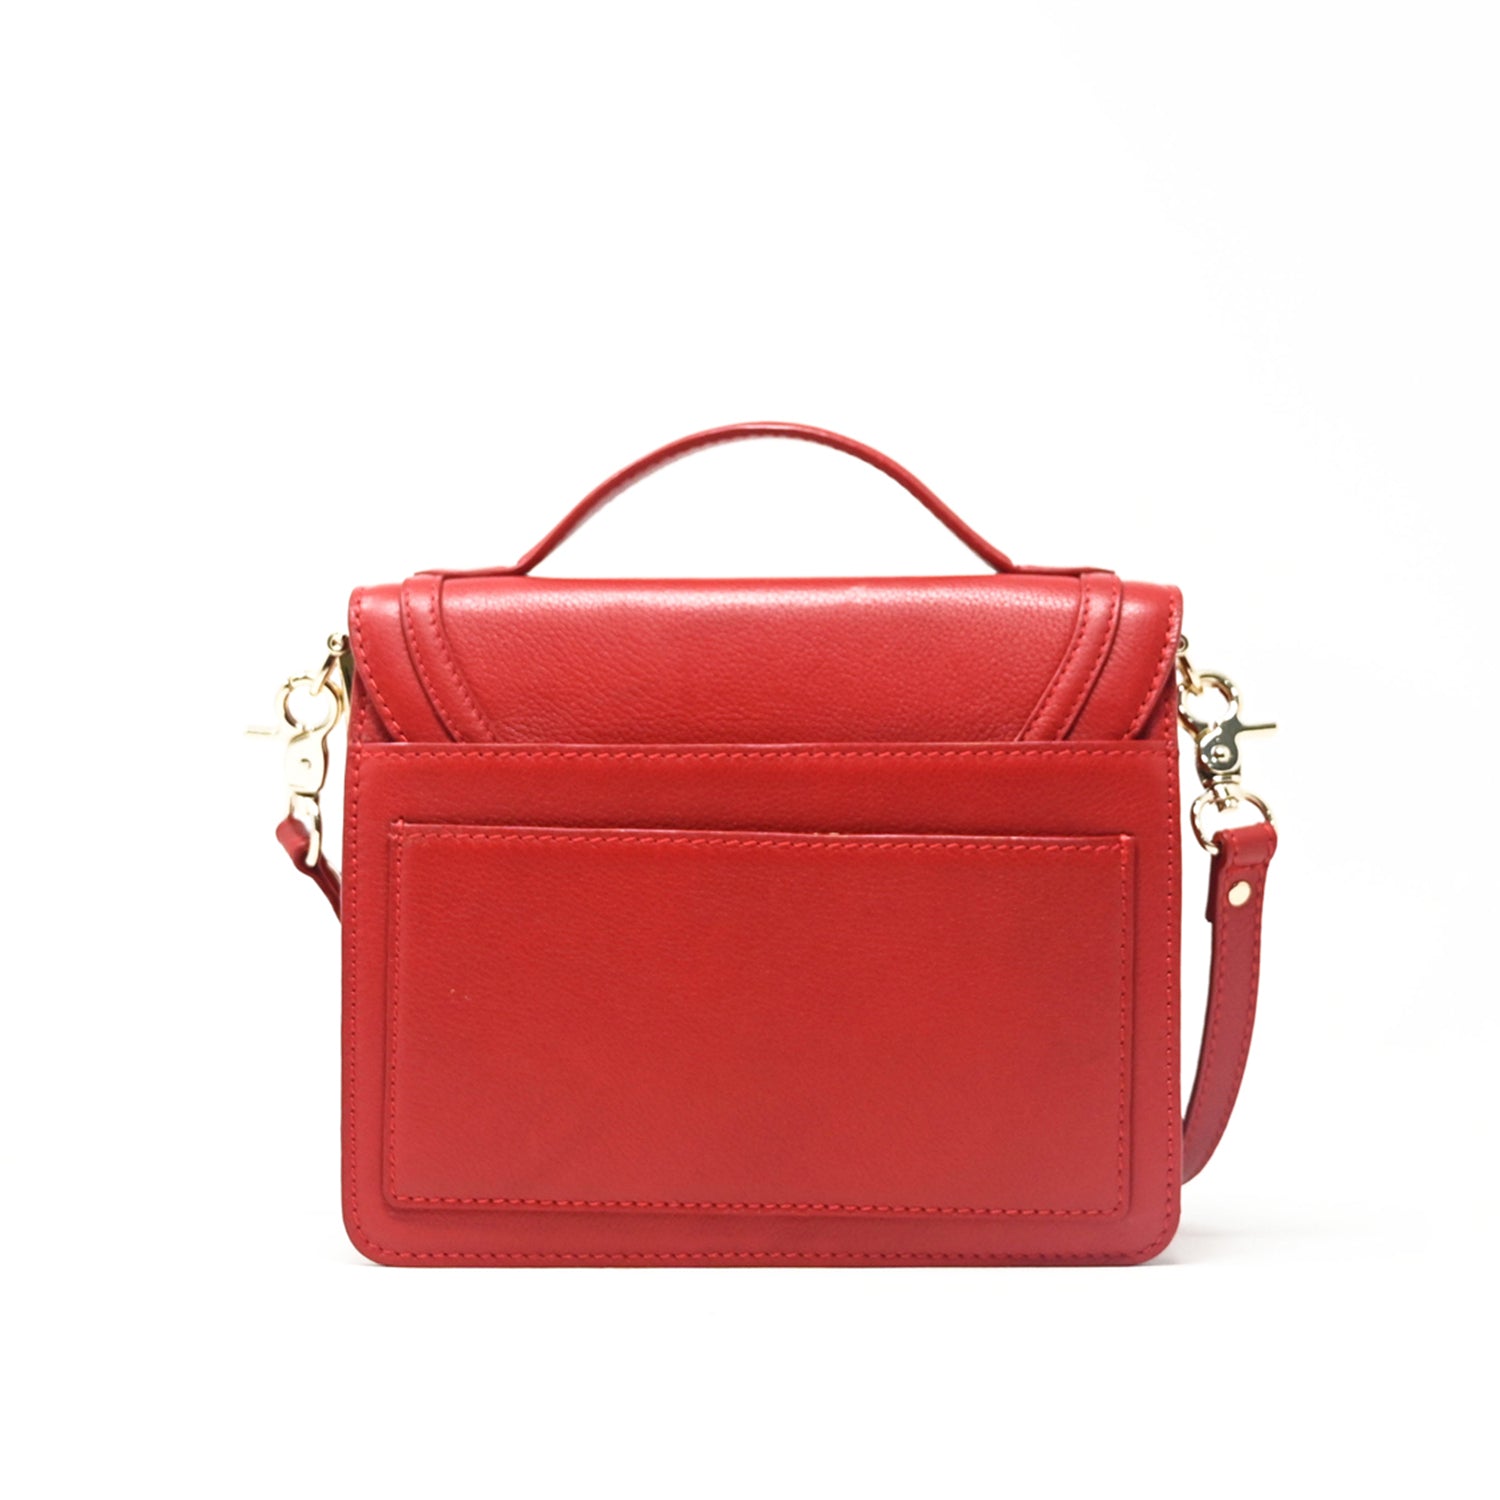 Avon Signature Collection Brown & Beige Large Shoulder Bag Purse Pre-owned  | eBay